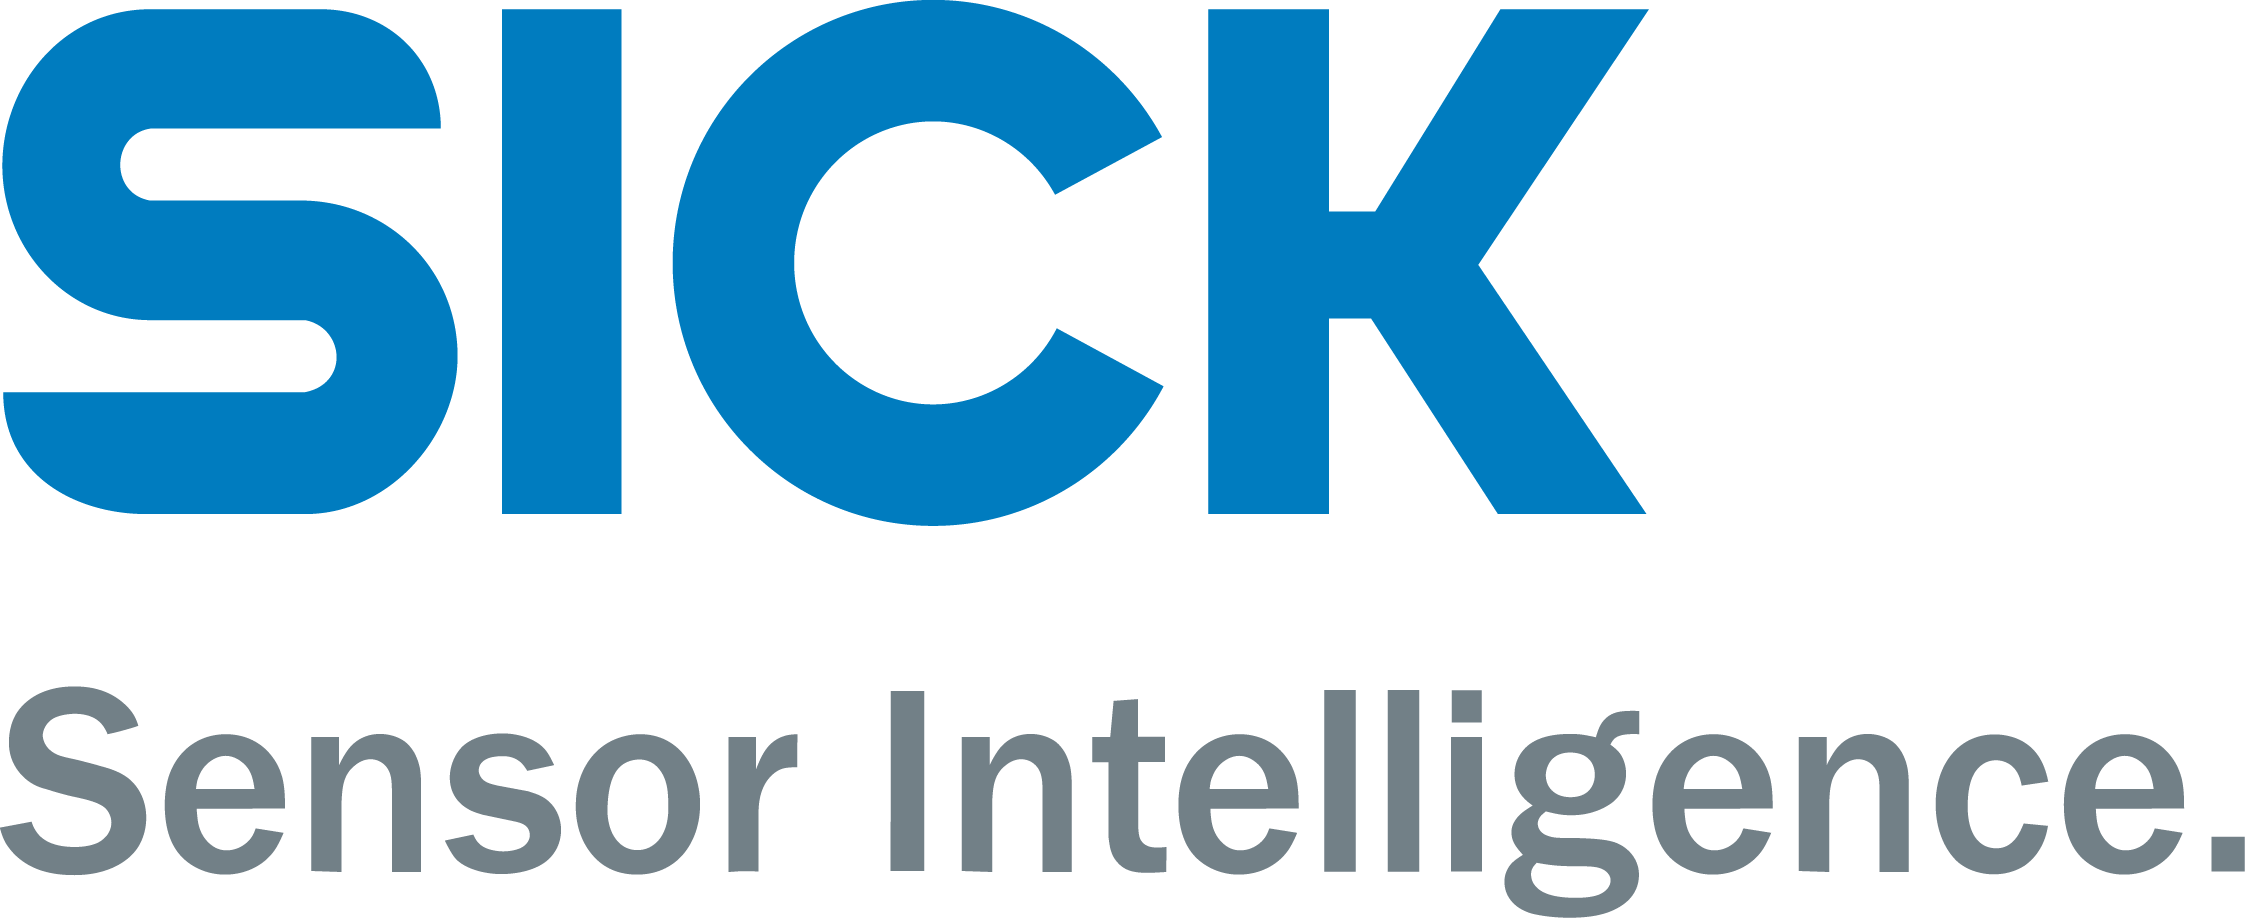 sick-logo-claim_4c